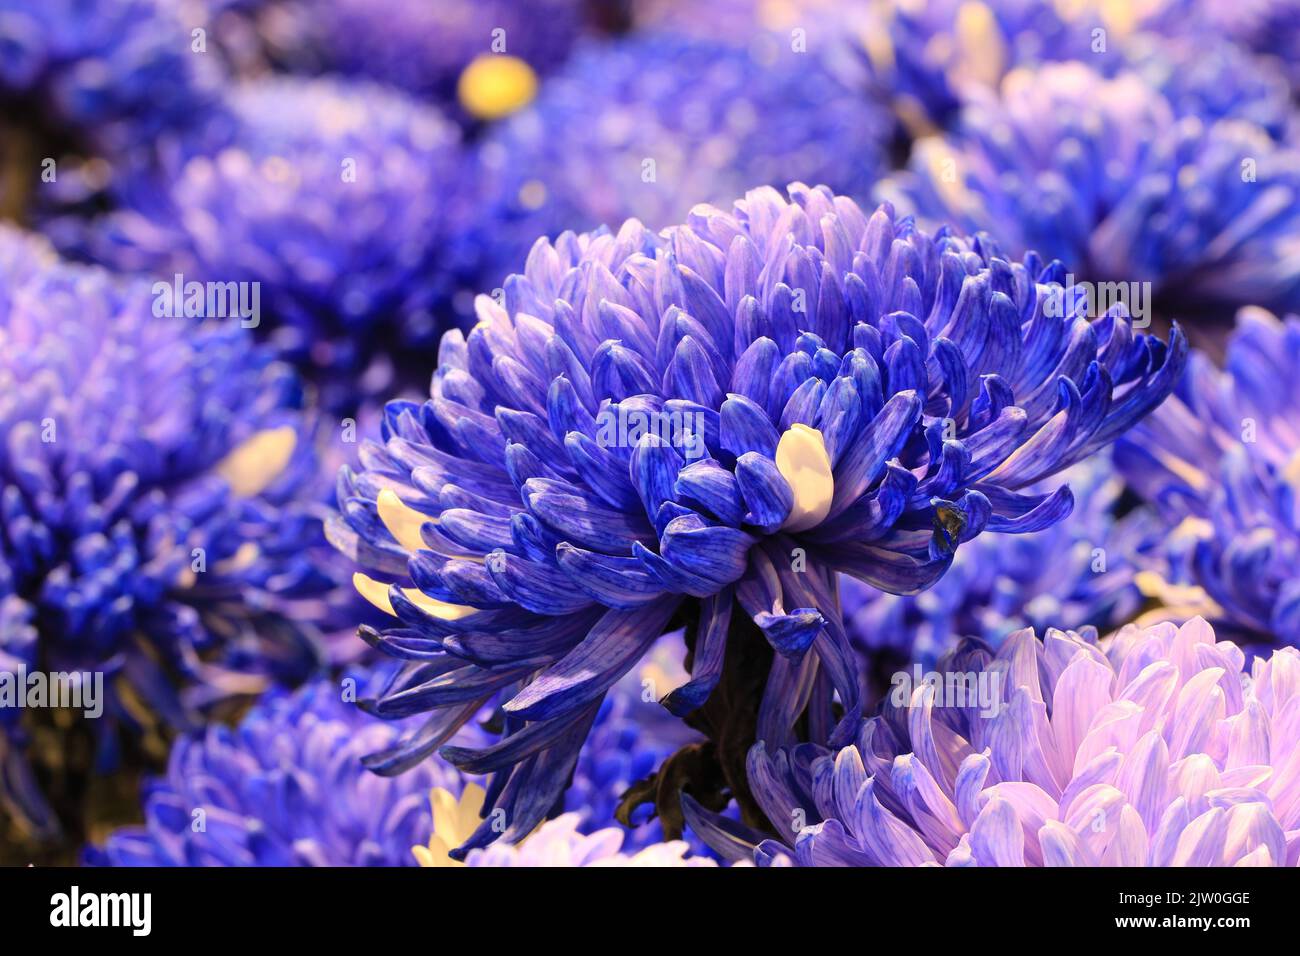 Chrysanthemum flowers,close-up of purple with blue Chrysanthemum flowers in full bloom in the garden Stock Photo